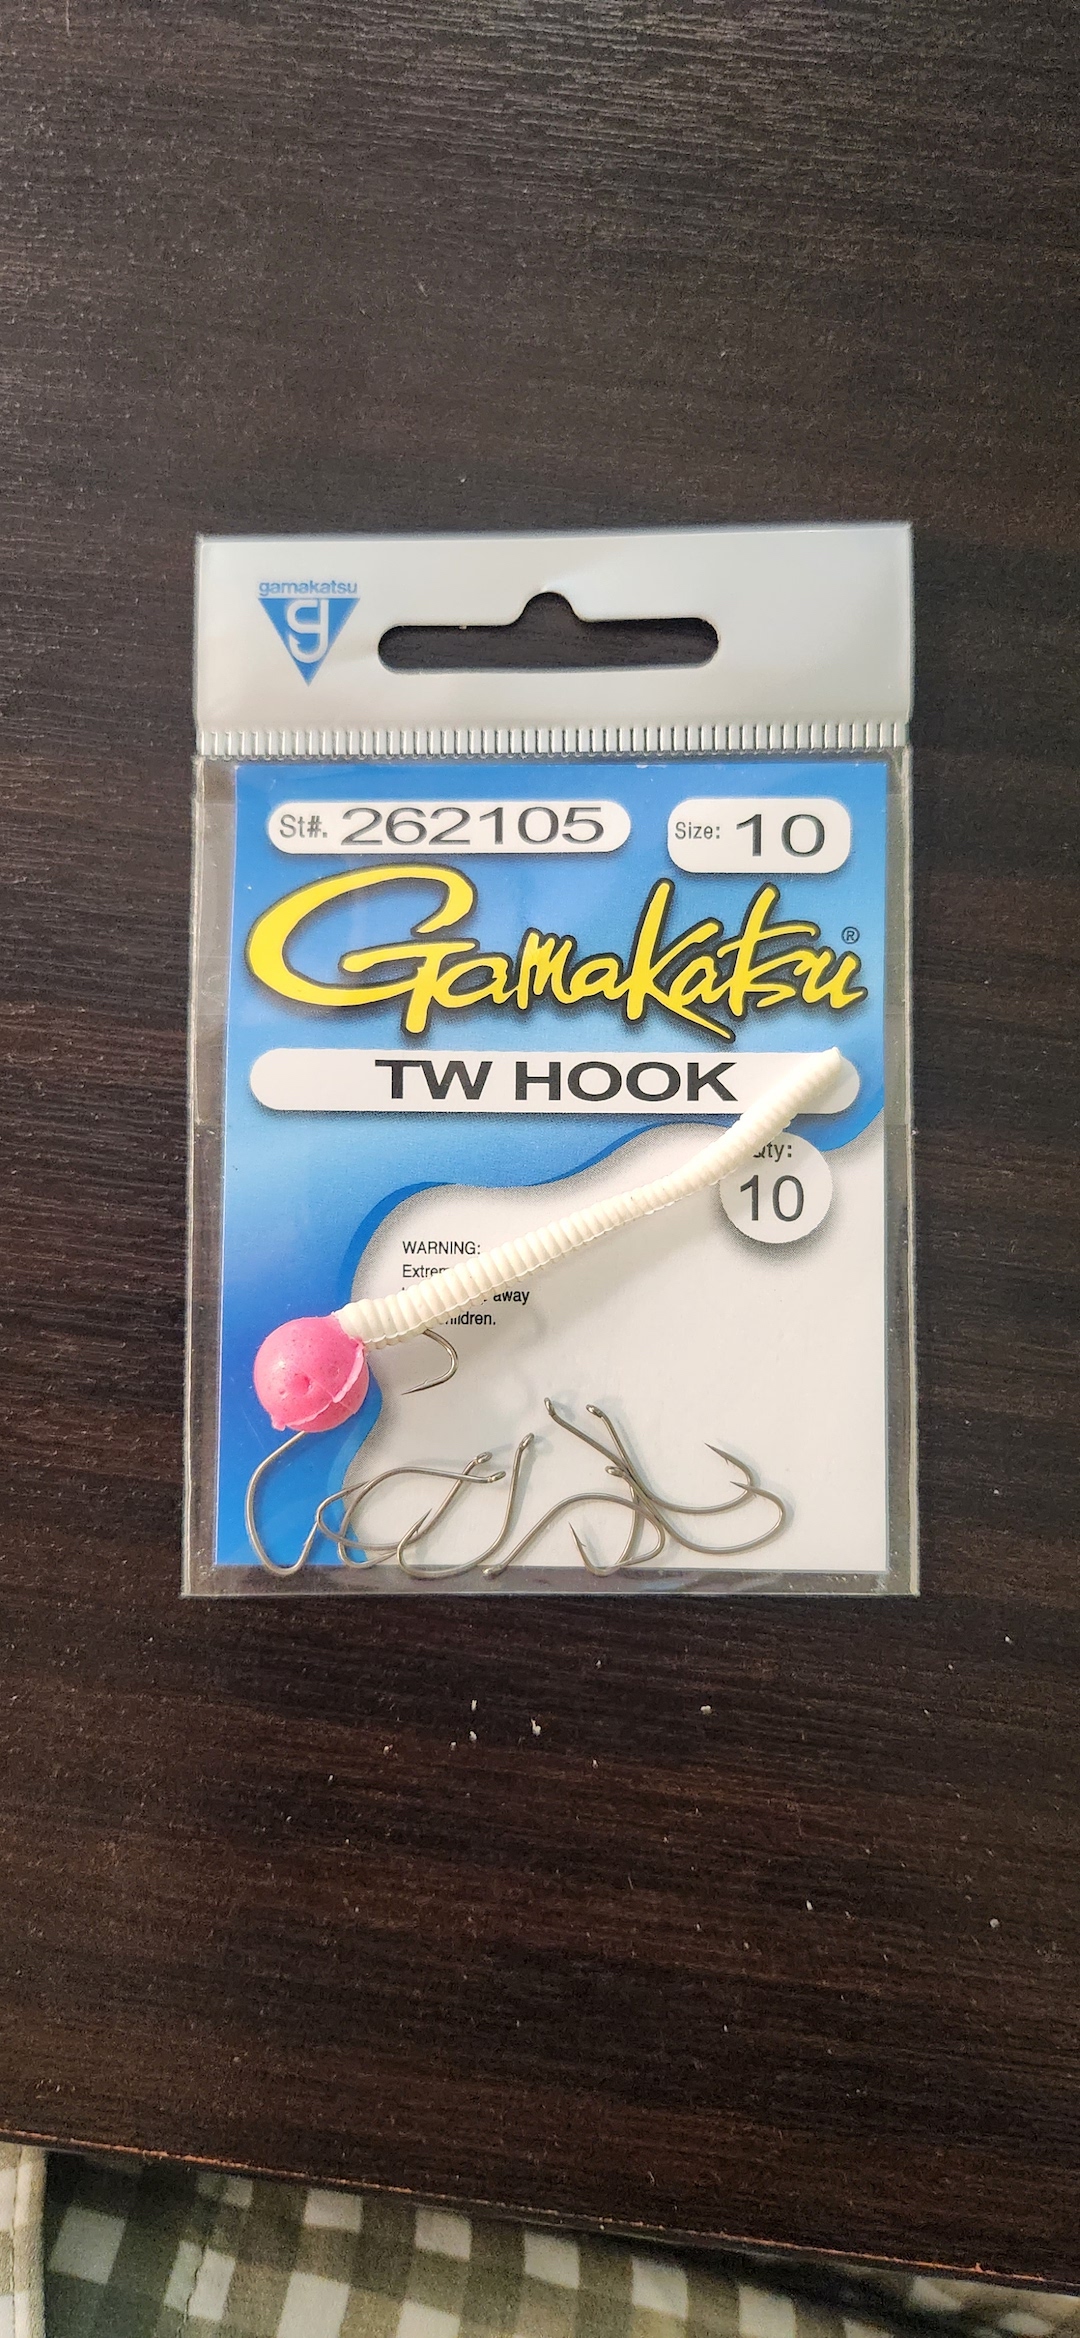 Single Egg Hook, Barb on Shank (10 Pack) - Gamakatsu USA Fishing Hooks